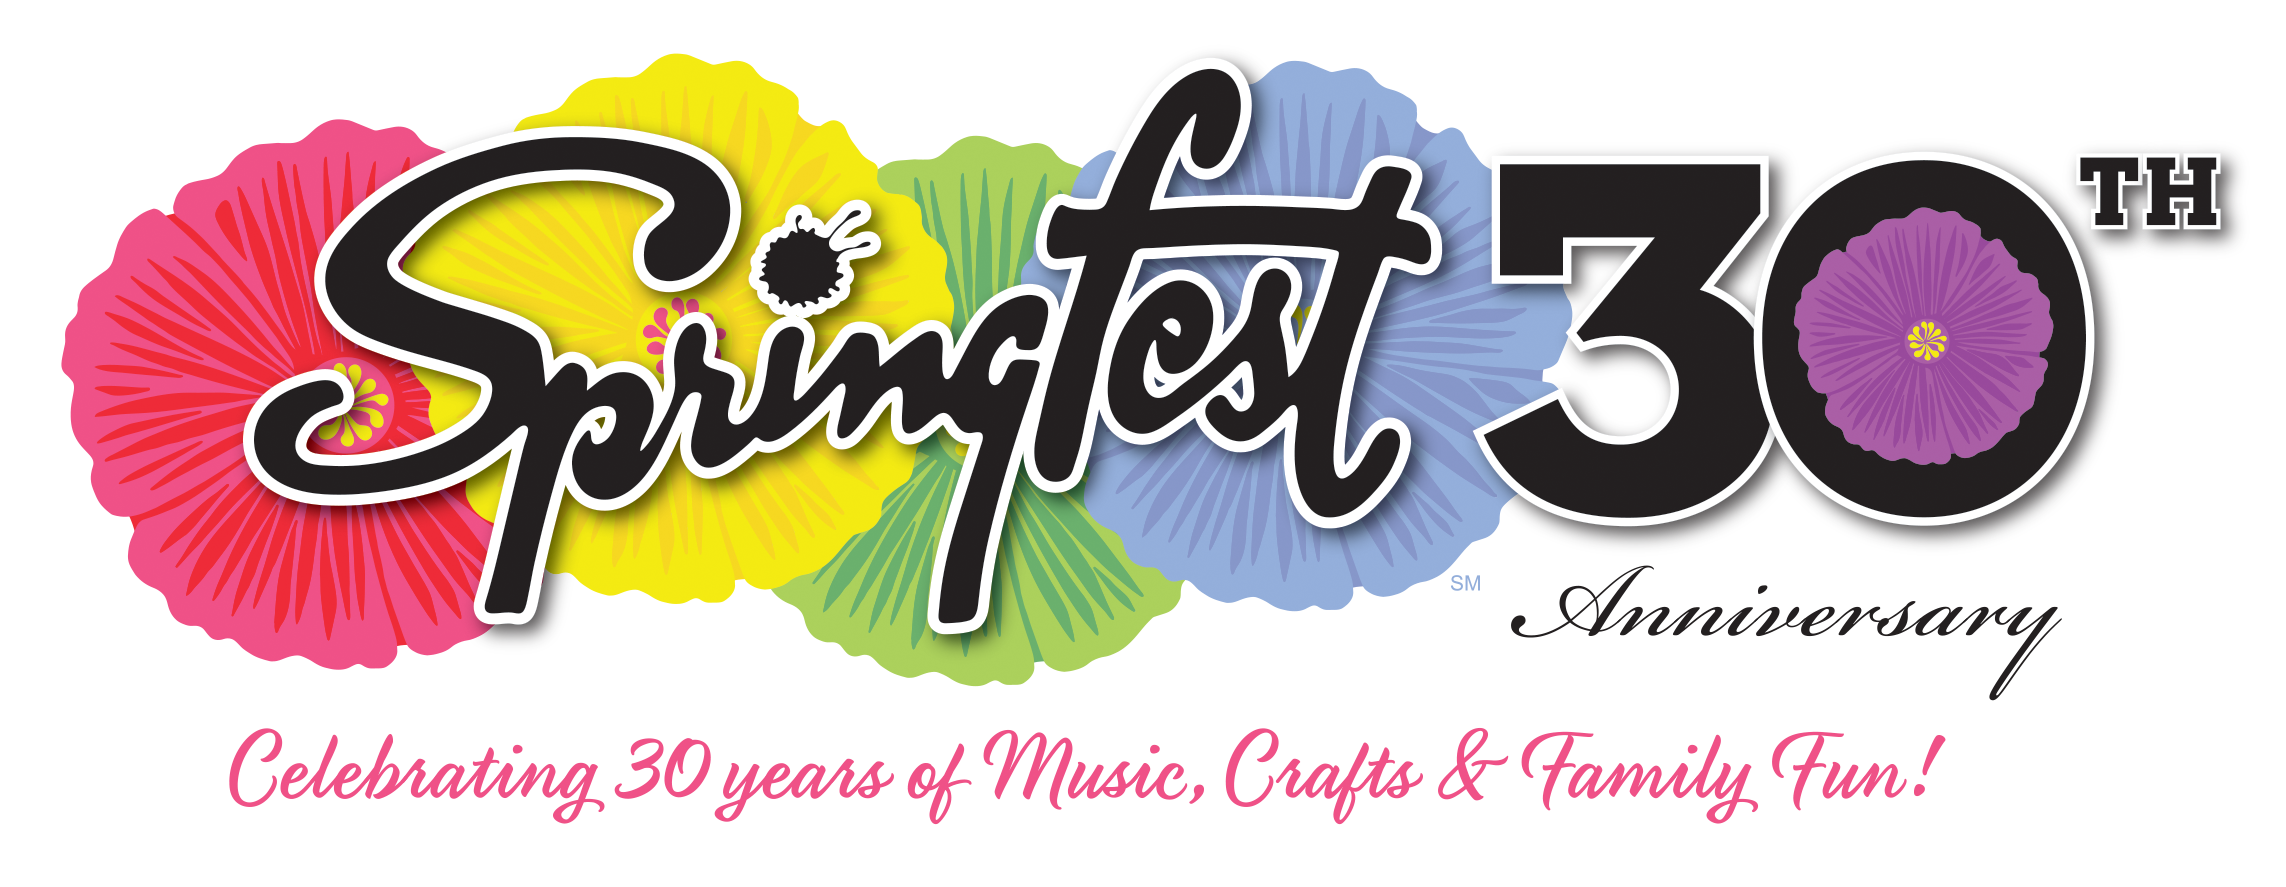 Springfest 30th Anniversary